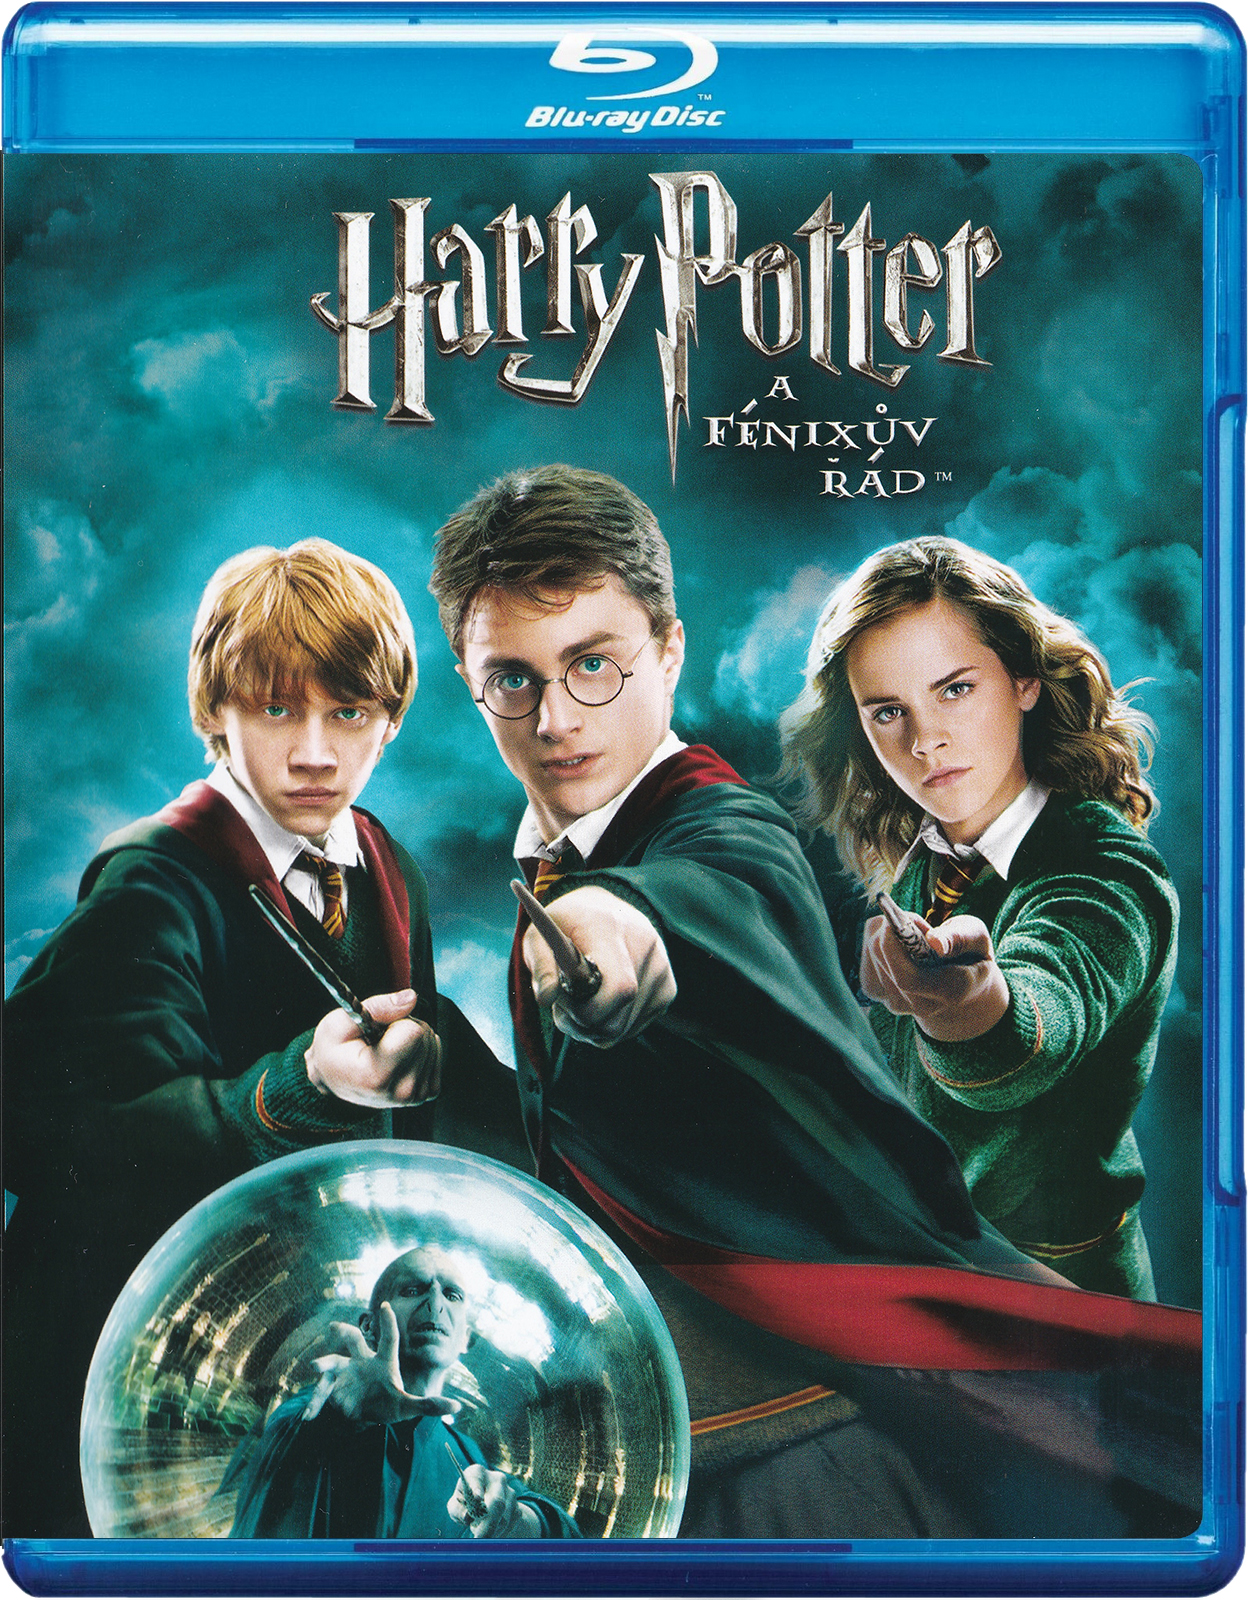 Stiahni si HD Filmy Harry Potter a Fenixuv rad/Harry Potter and the Order of the Phoenix (2007)(CZ/EN)[1080pHD] = CSFD 80%